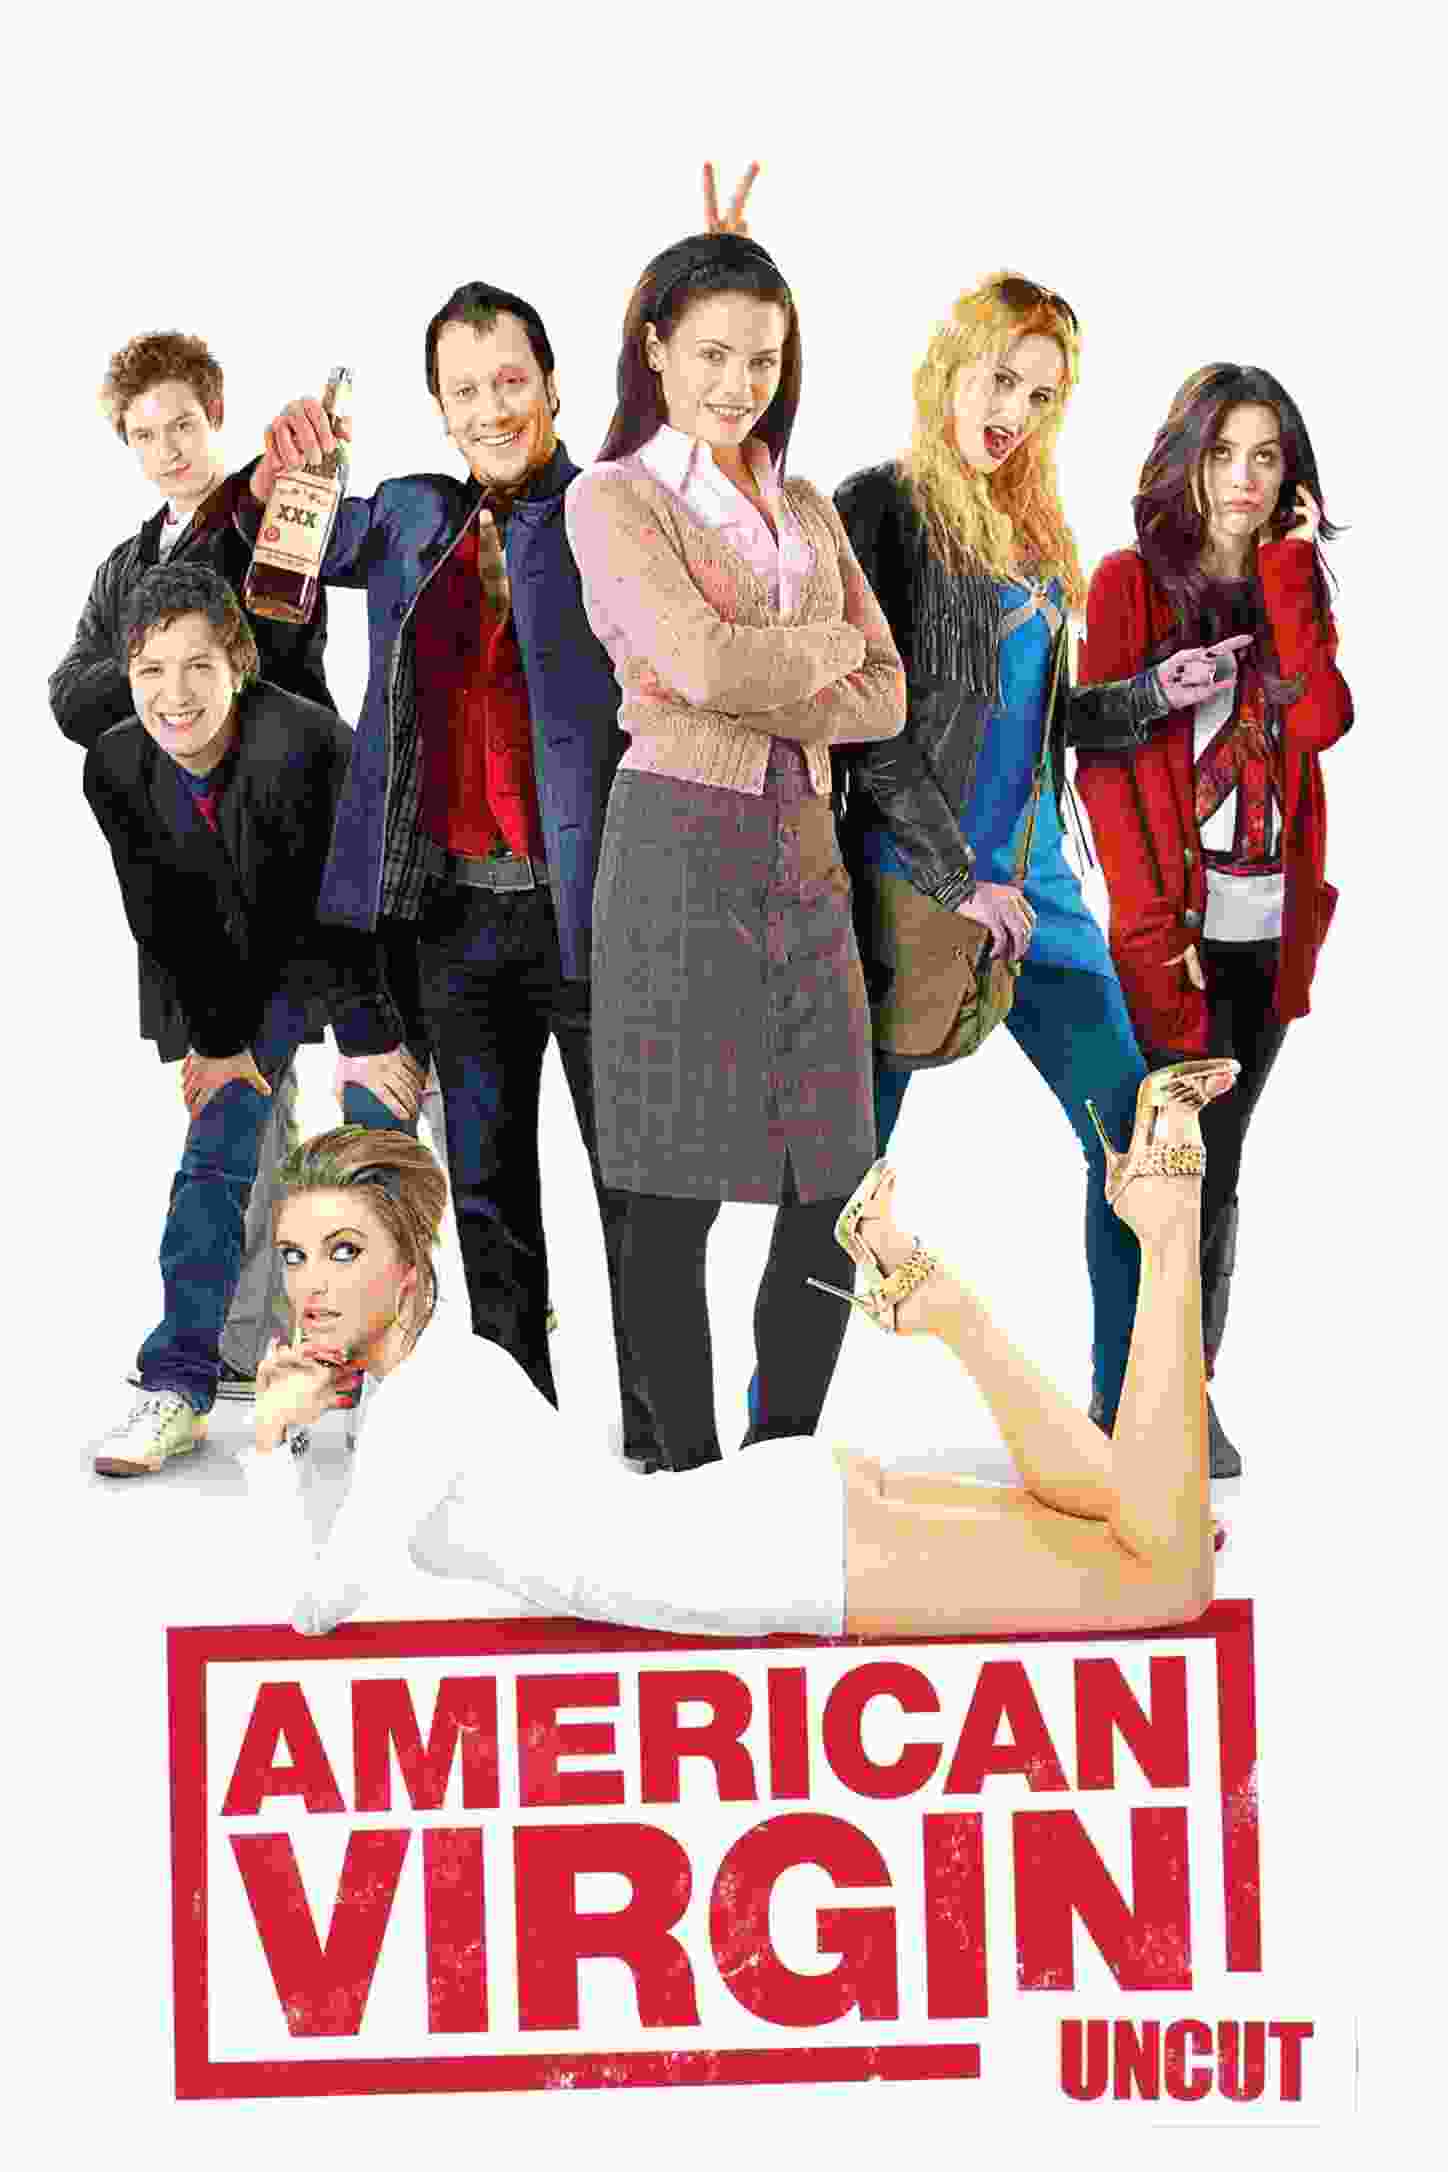 American Virgin (2009) Jenna Dewan